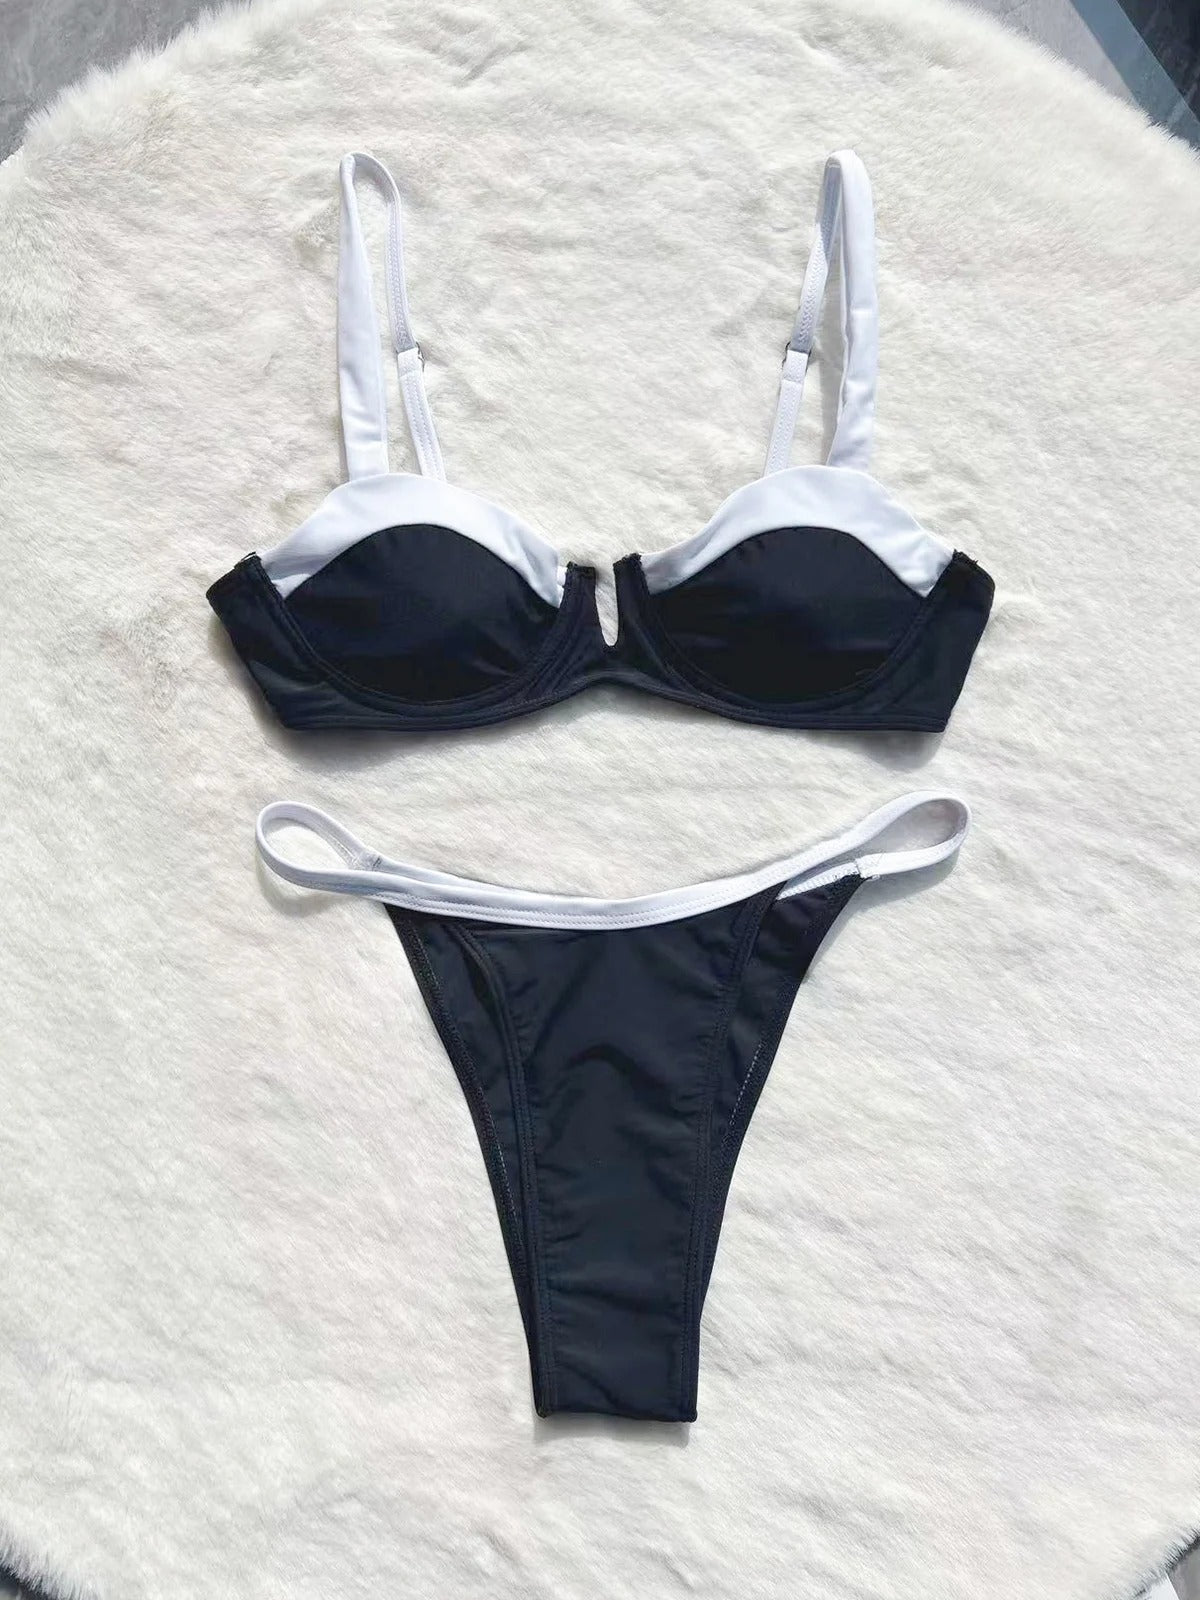 penelope bikini contrast trim black and white front